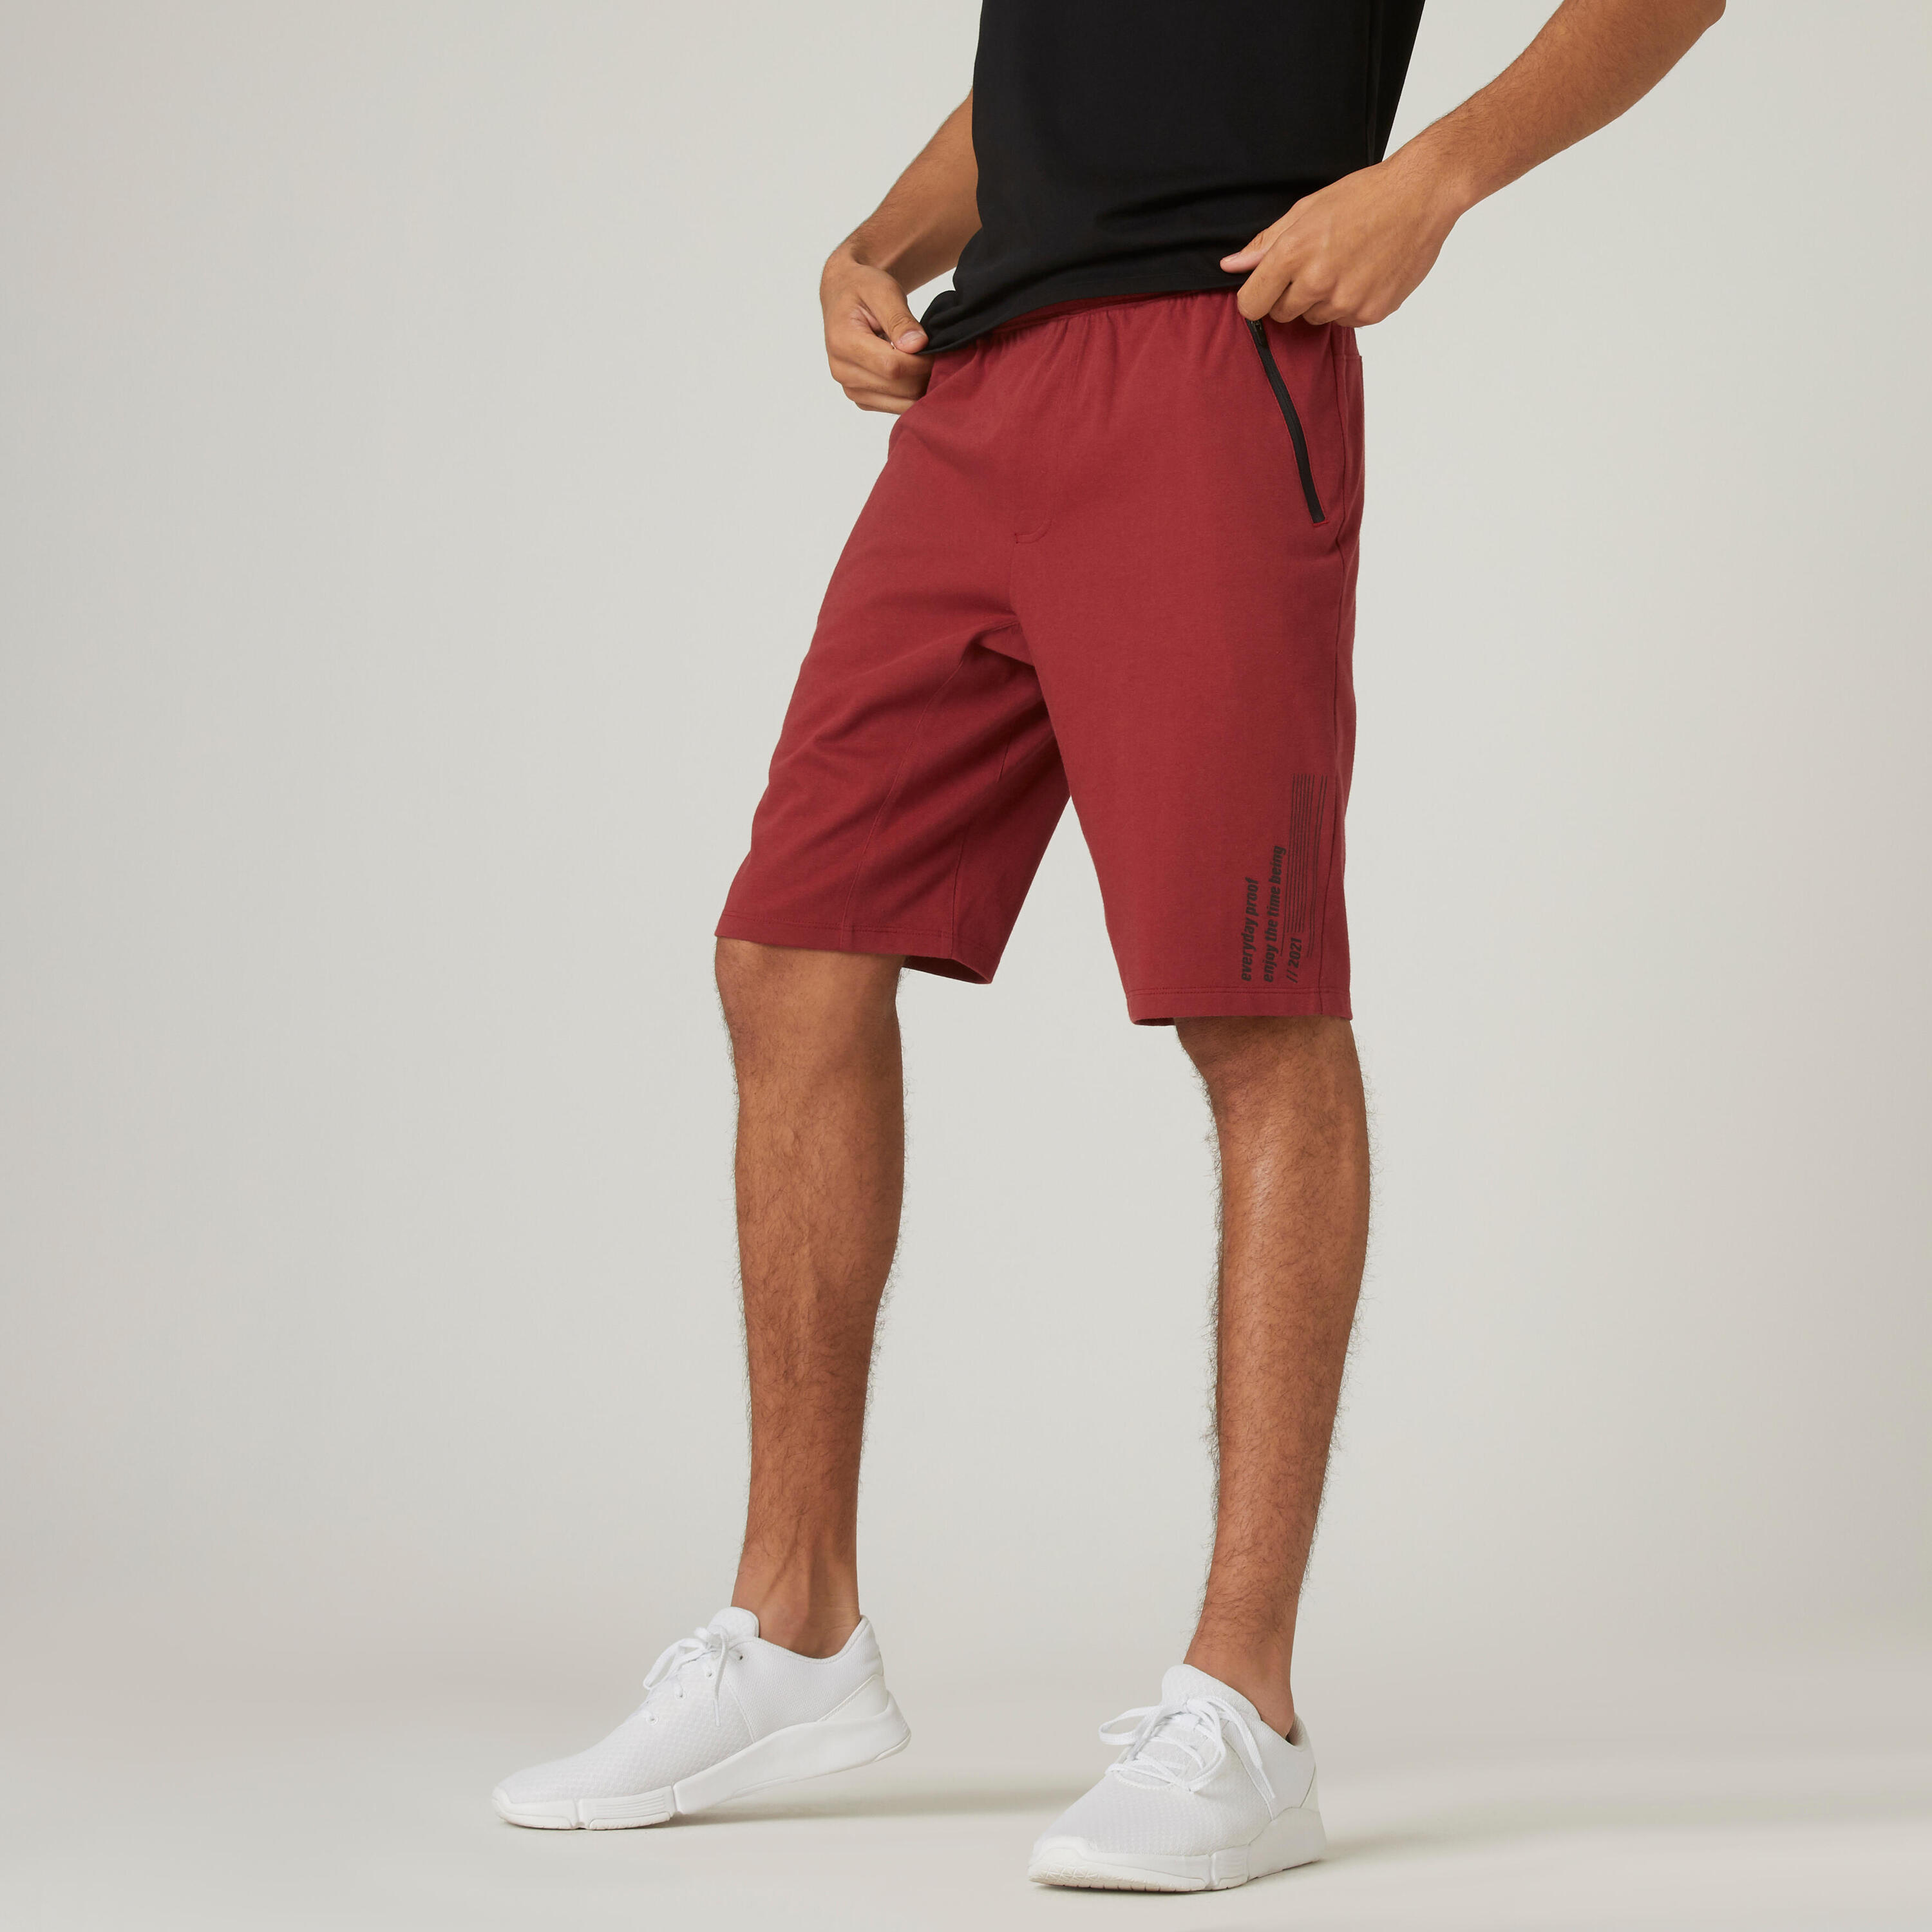 Men's Cotton Blend Shorts - Red 1/8